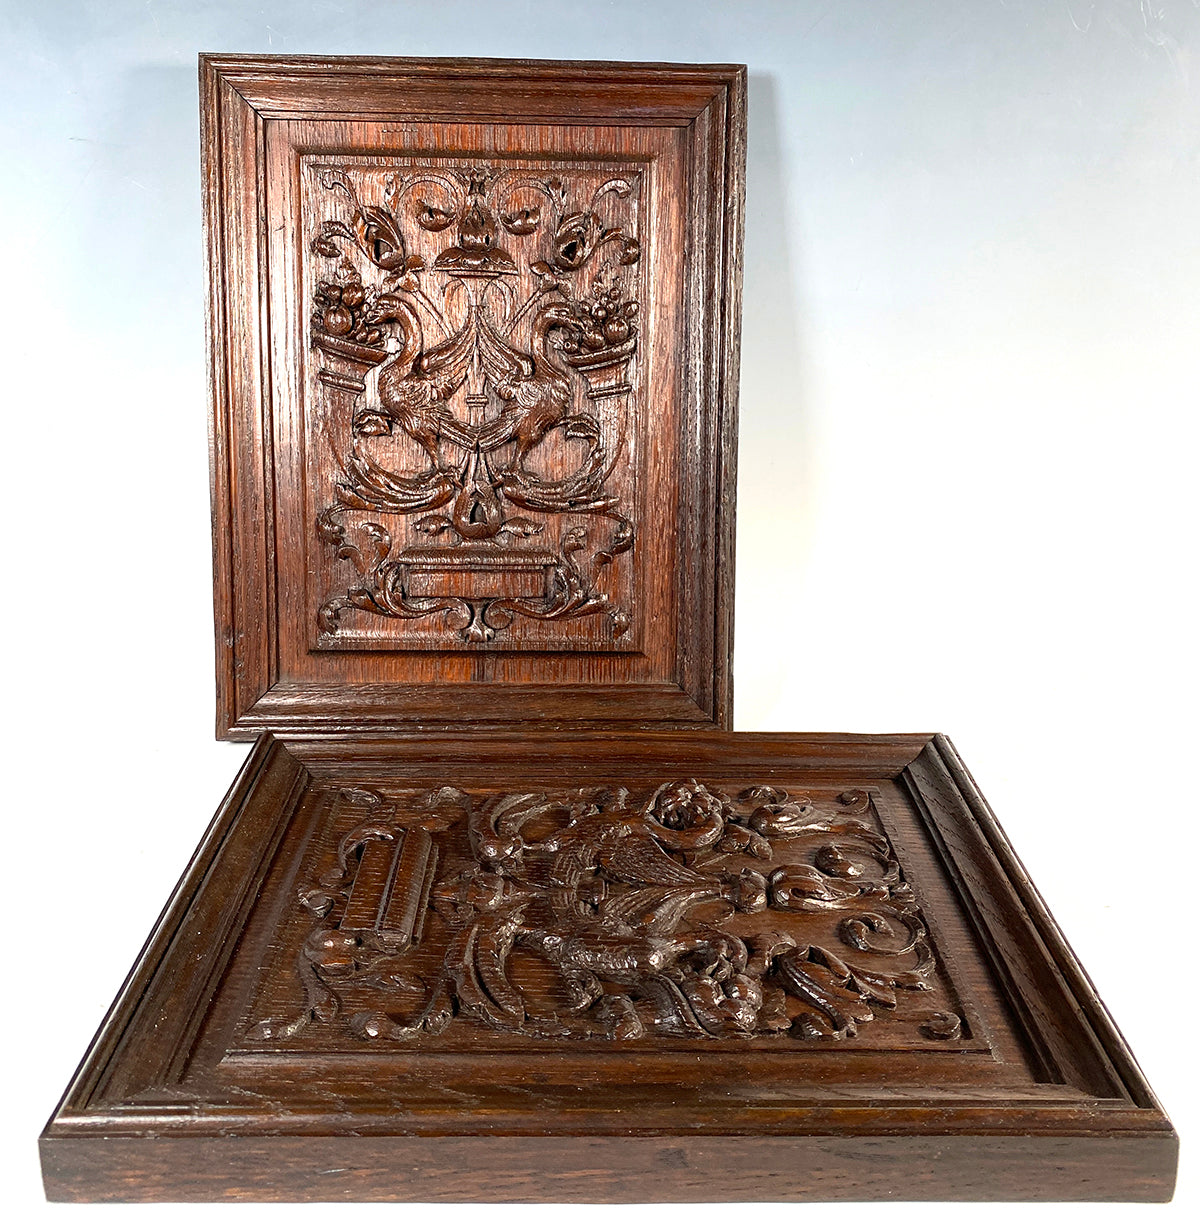 PAIR: Antique 19th Century Hand Carved Wood Neo-Renaissance Cabinet Doors, Griffen Sculpture